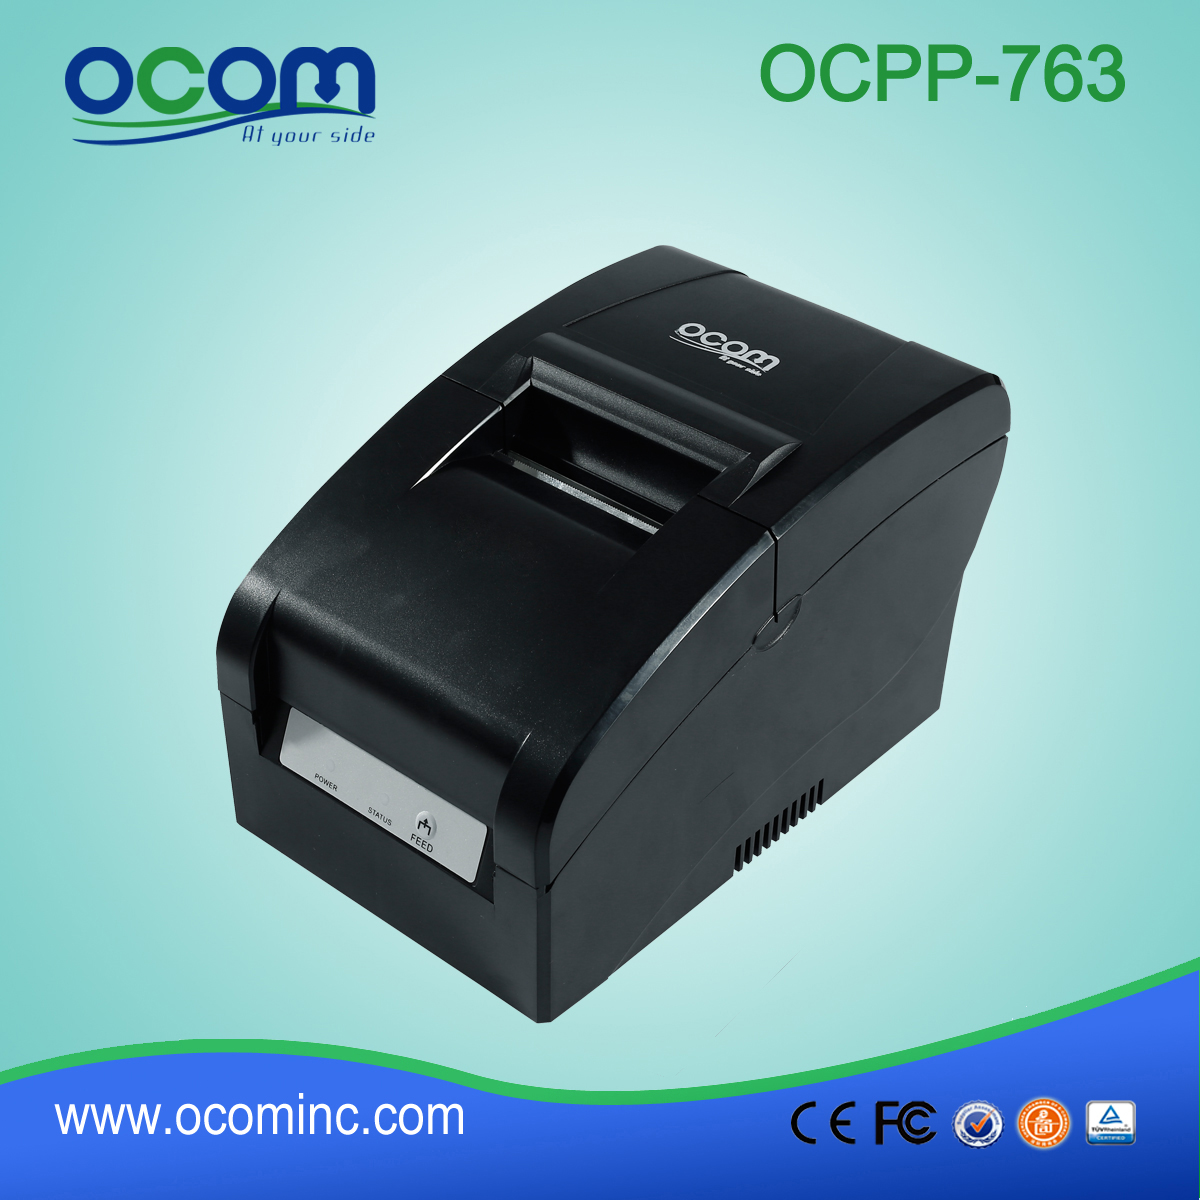 OCPP-763 Mini Impact Dot Matrix Printer с шириной бумаги шириной 76 мм для кассового аппарата